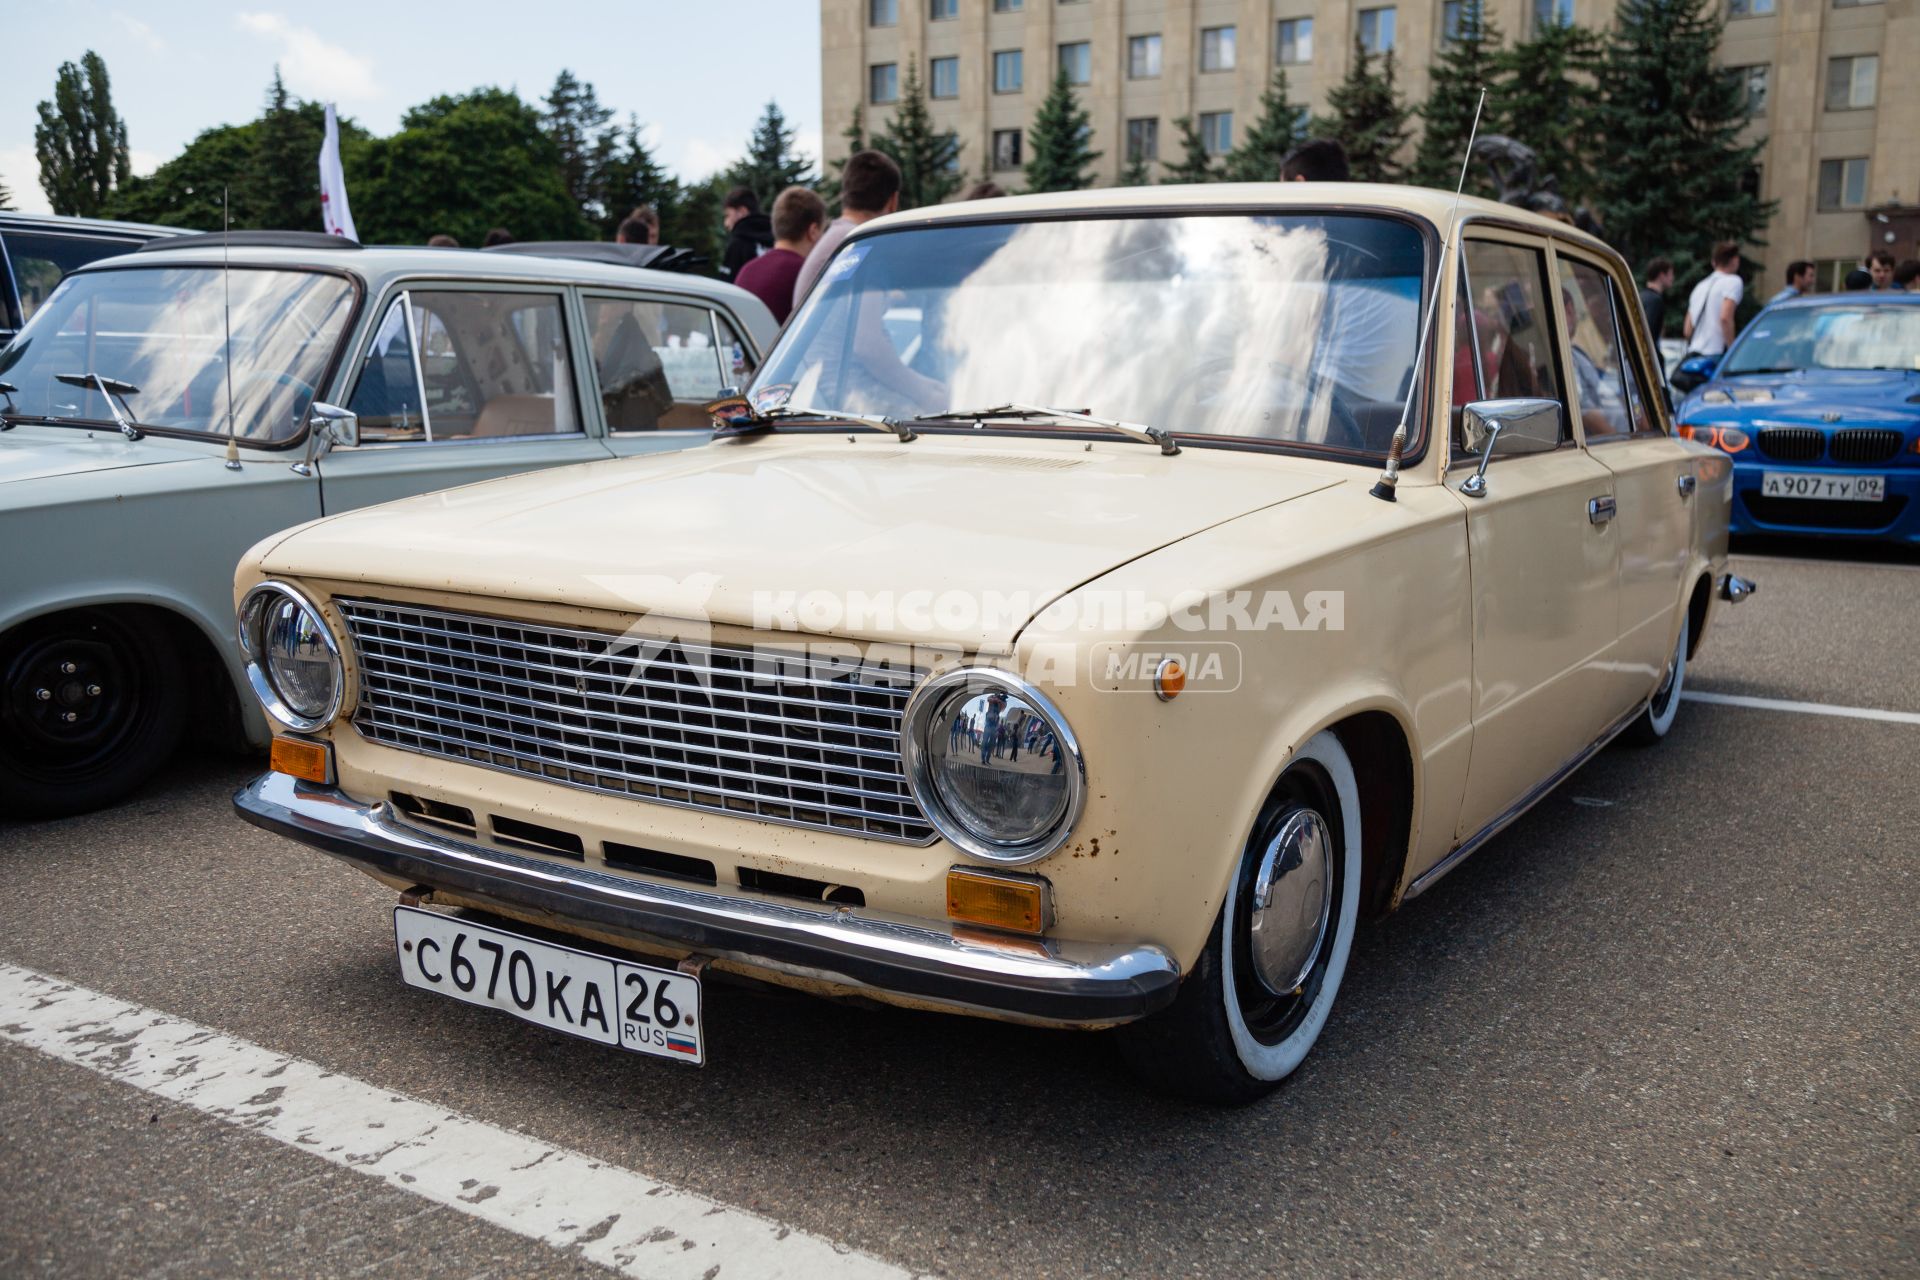 Ставрополь. Автомобиль ВАЗ-2101 на фестивале `Парковка` на площади Ленина.